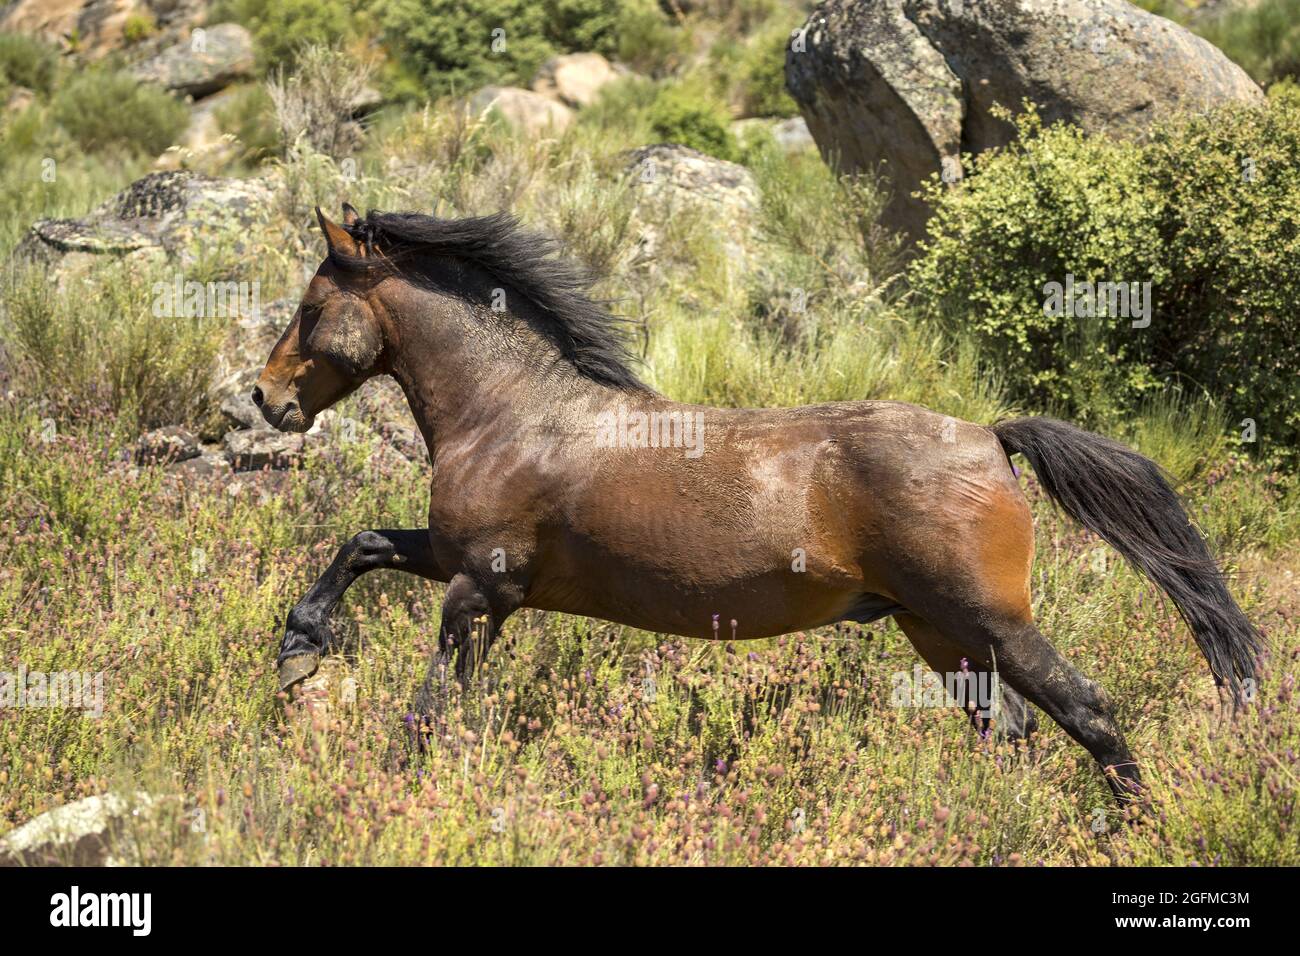 Wild and endangered Garrano horses, Faia Brava, Greater Coa Valley, Portugal, Europe Stock Photo